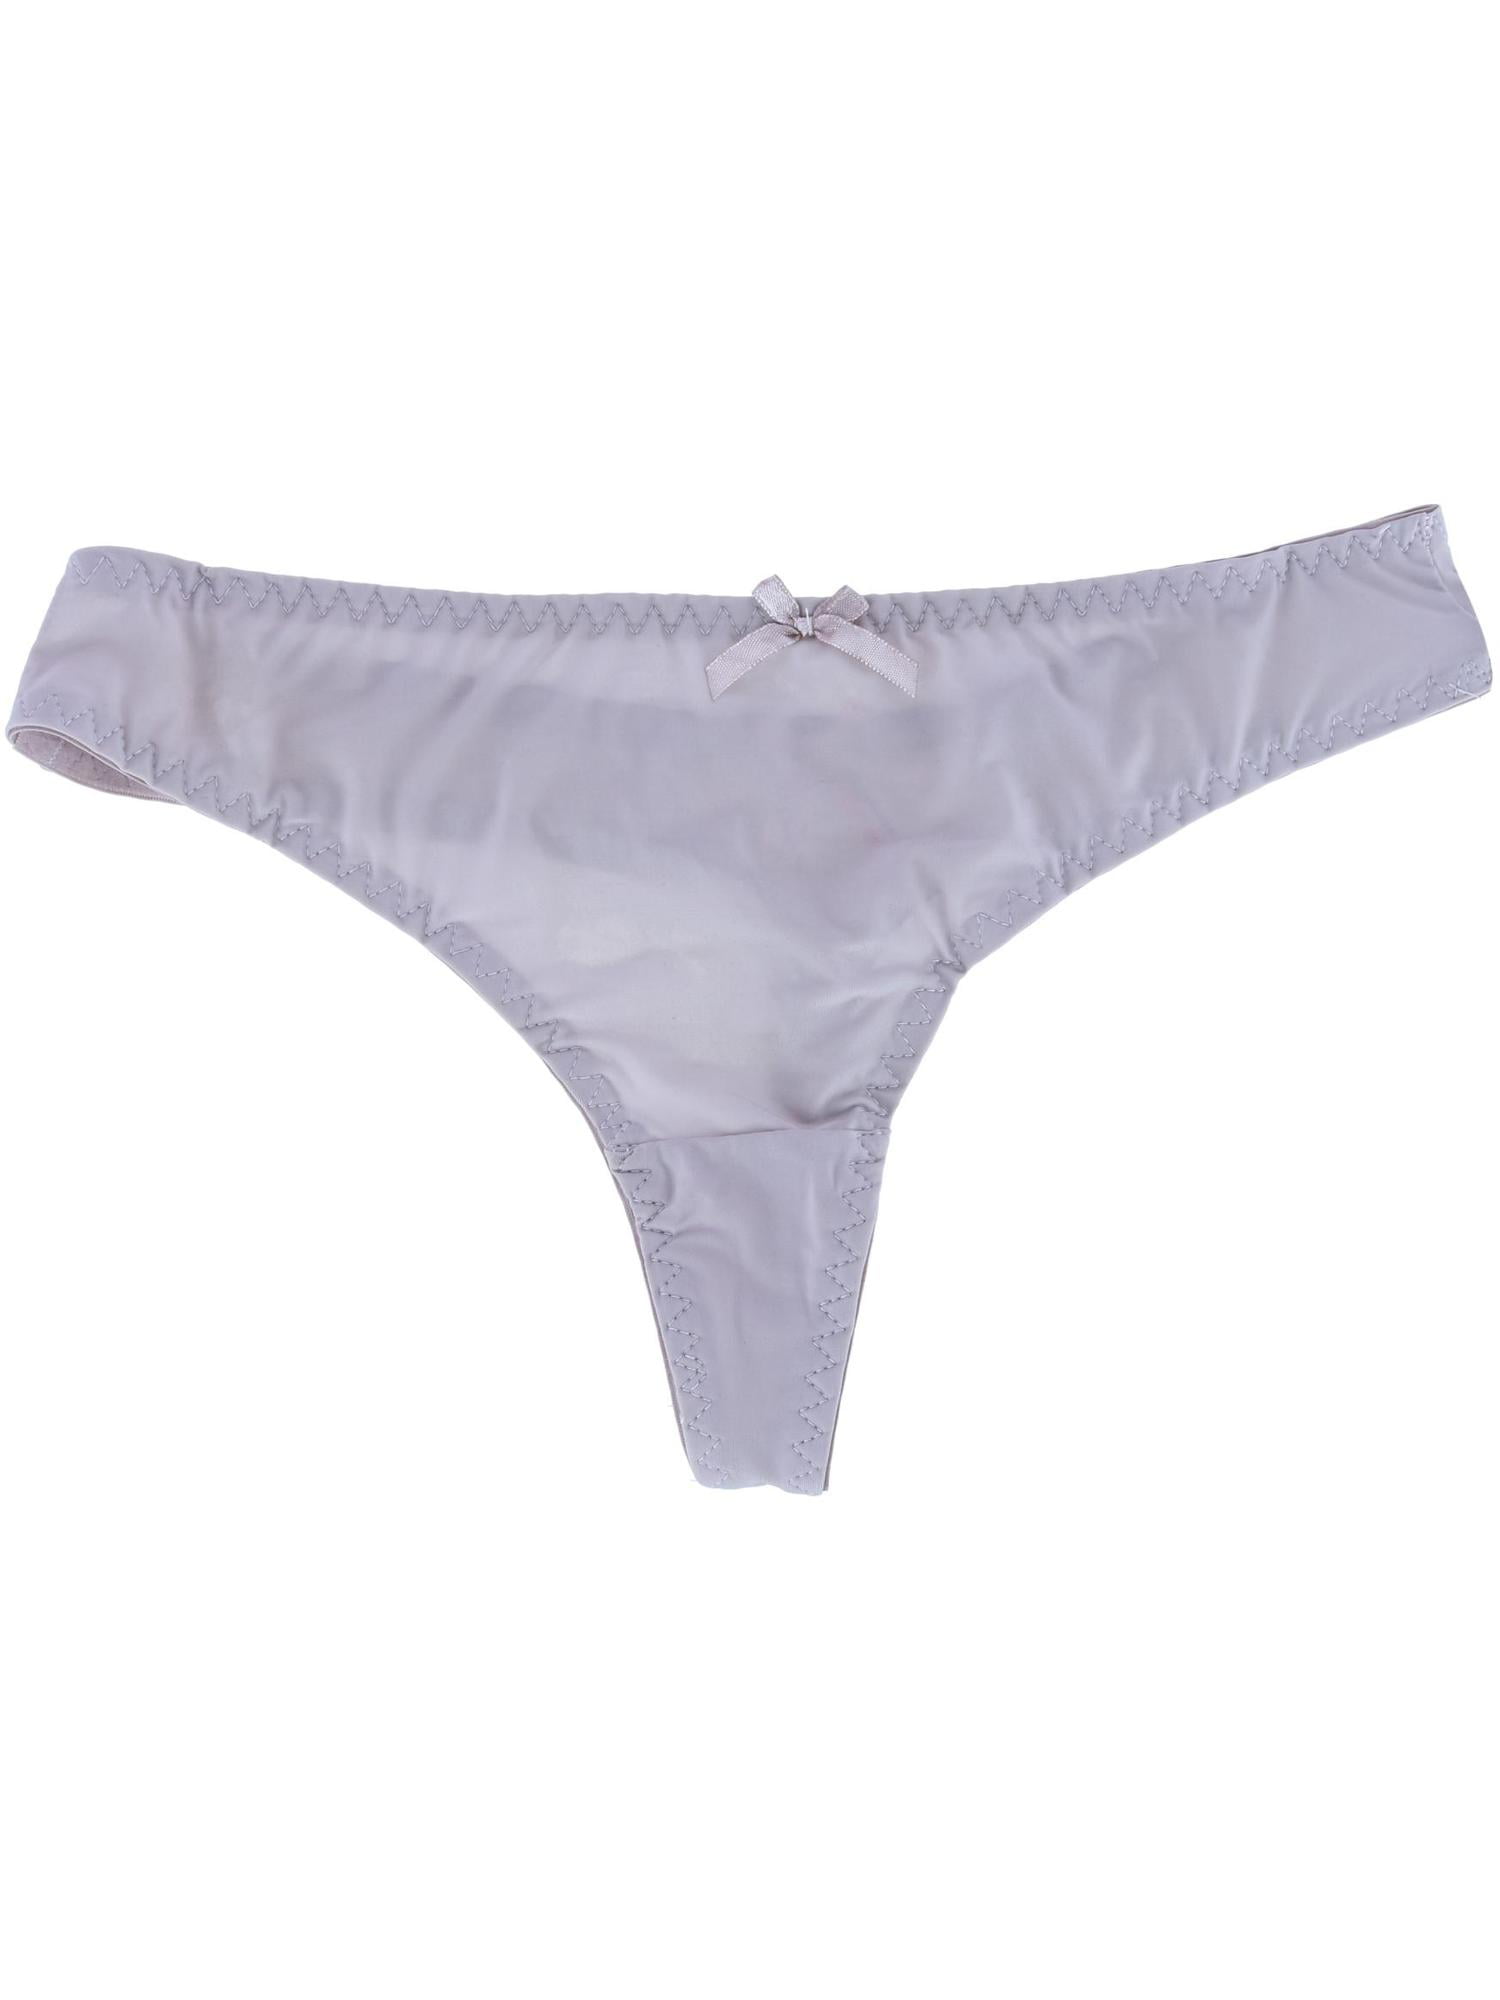 CTM French Cut Underwear (Women) 